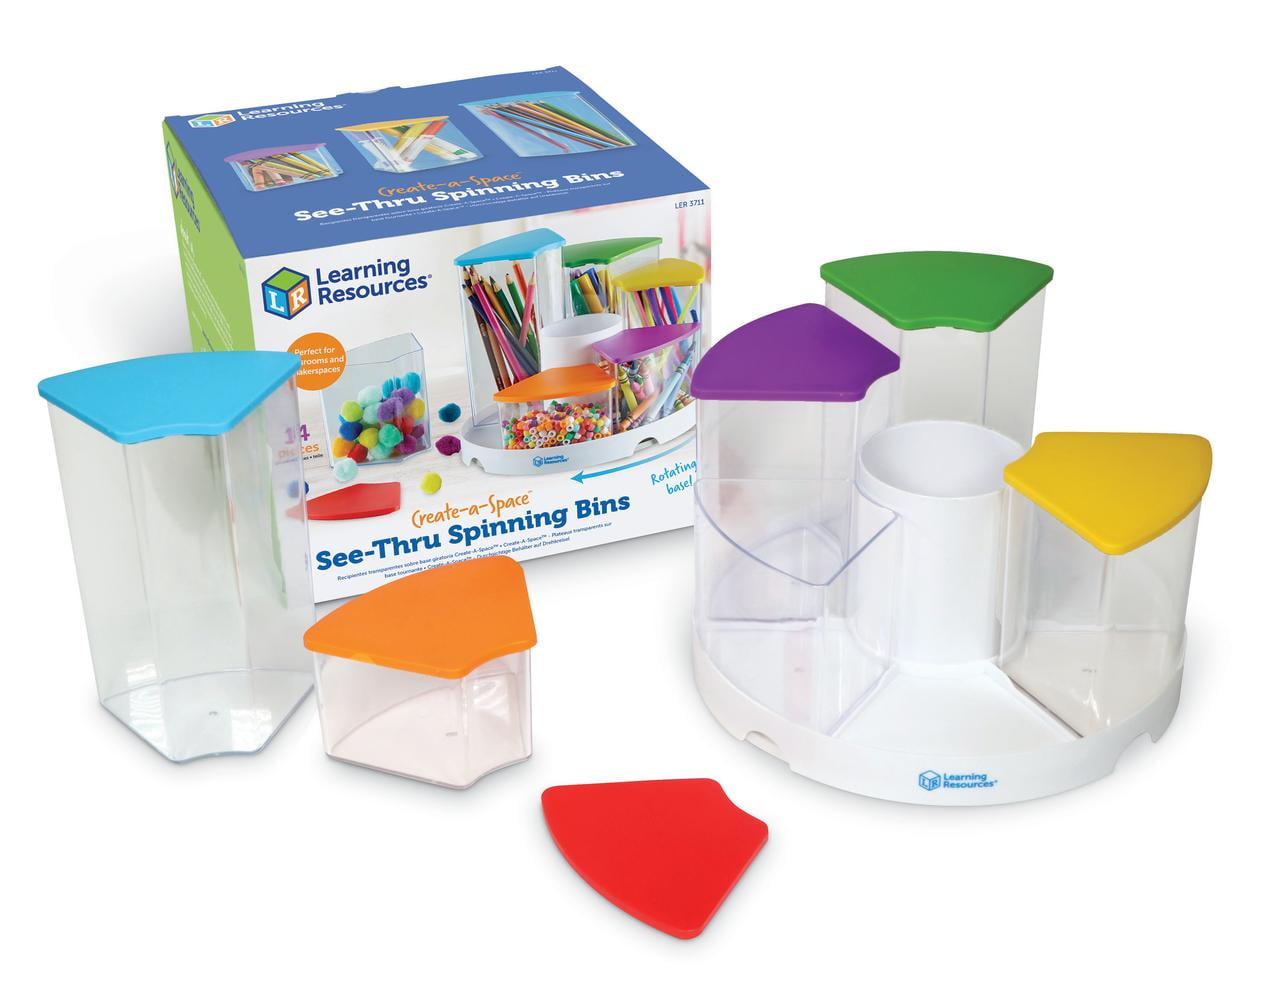 Crayon Organizer and Storage Holder Lazy Susan School Art Supplies Caddy |  Rotating Kids Desk Organizer Rainbow Color Bins | Pencil Marker Organizer